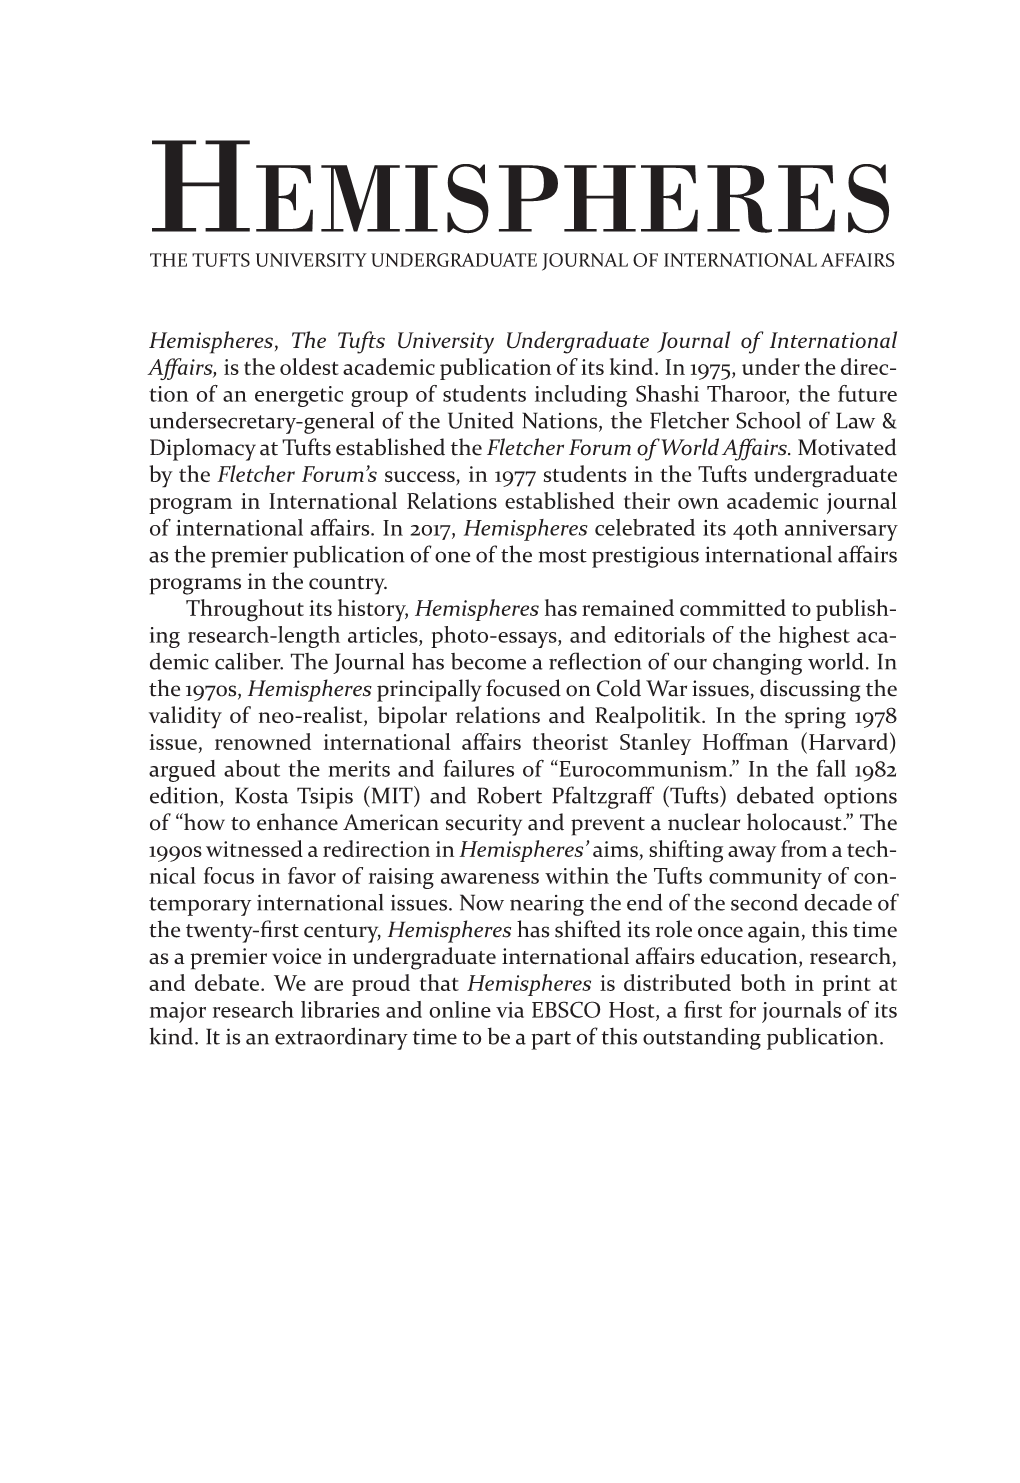 Hemispheres the Tufts University Undergraduate Journal of International Affairs